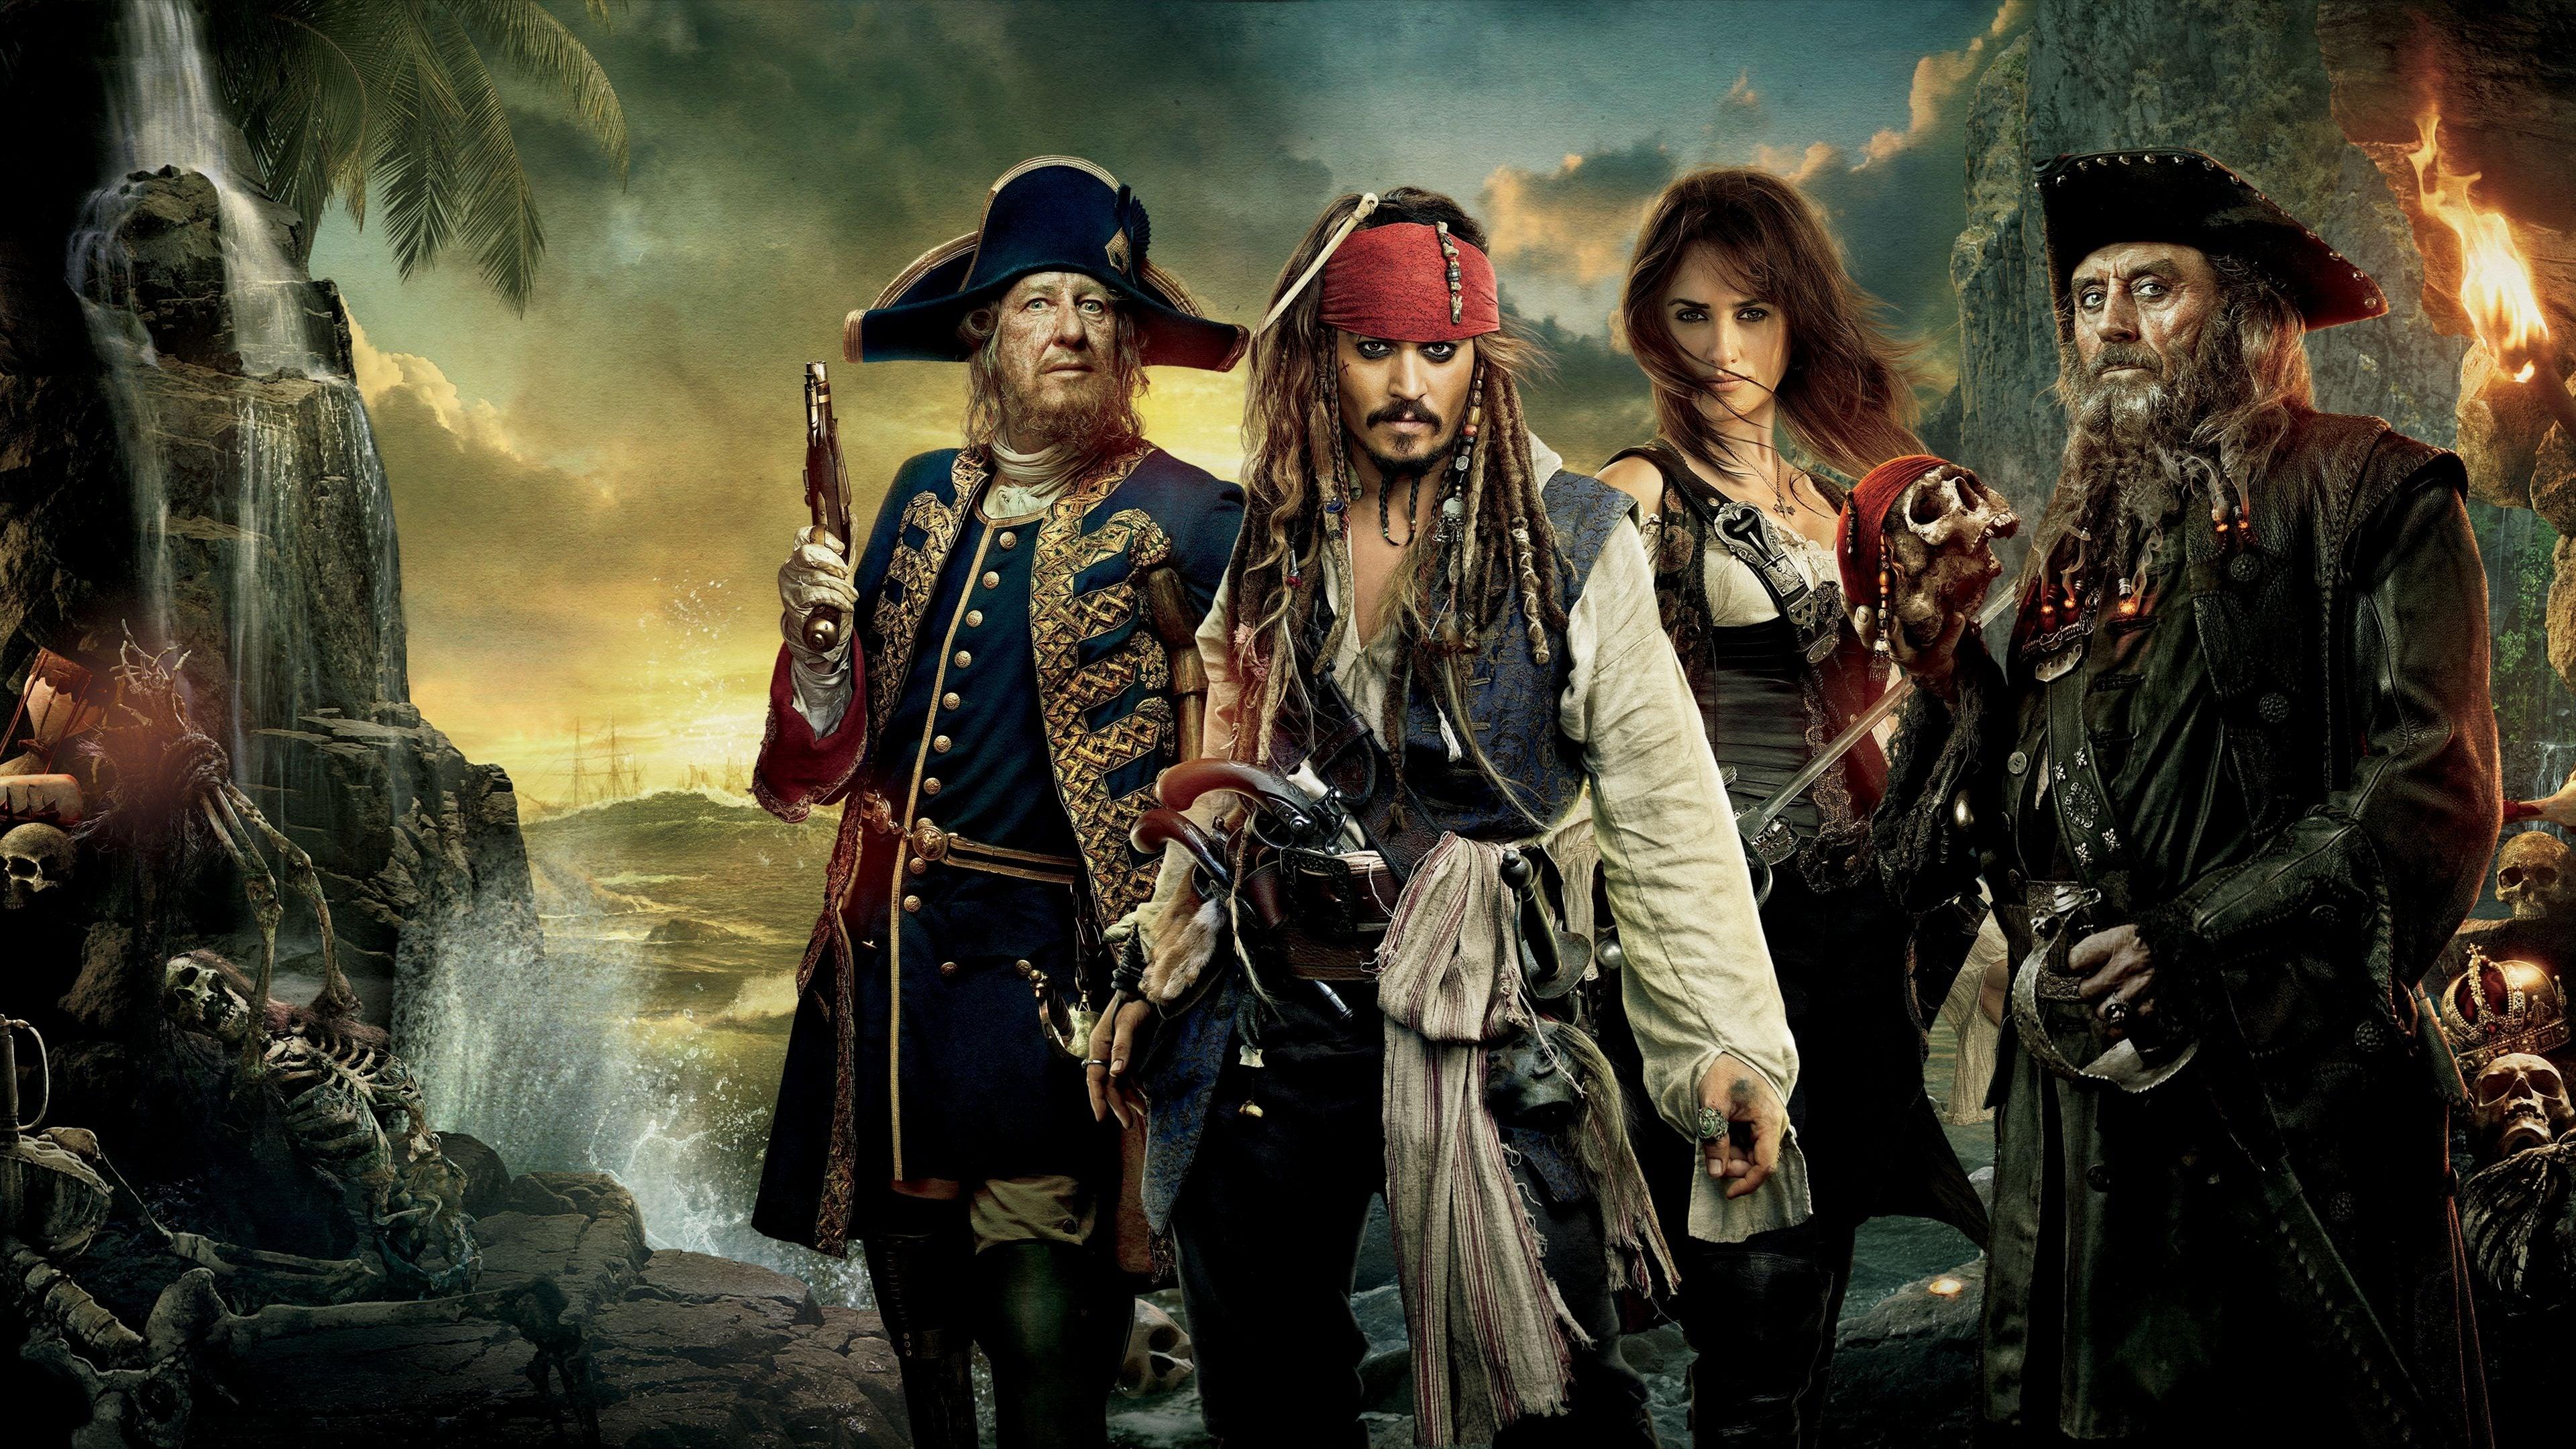 Pirates of the Caribbean: On Stranger Tides backdrop